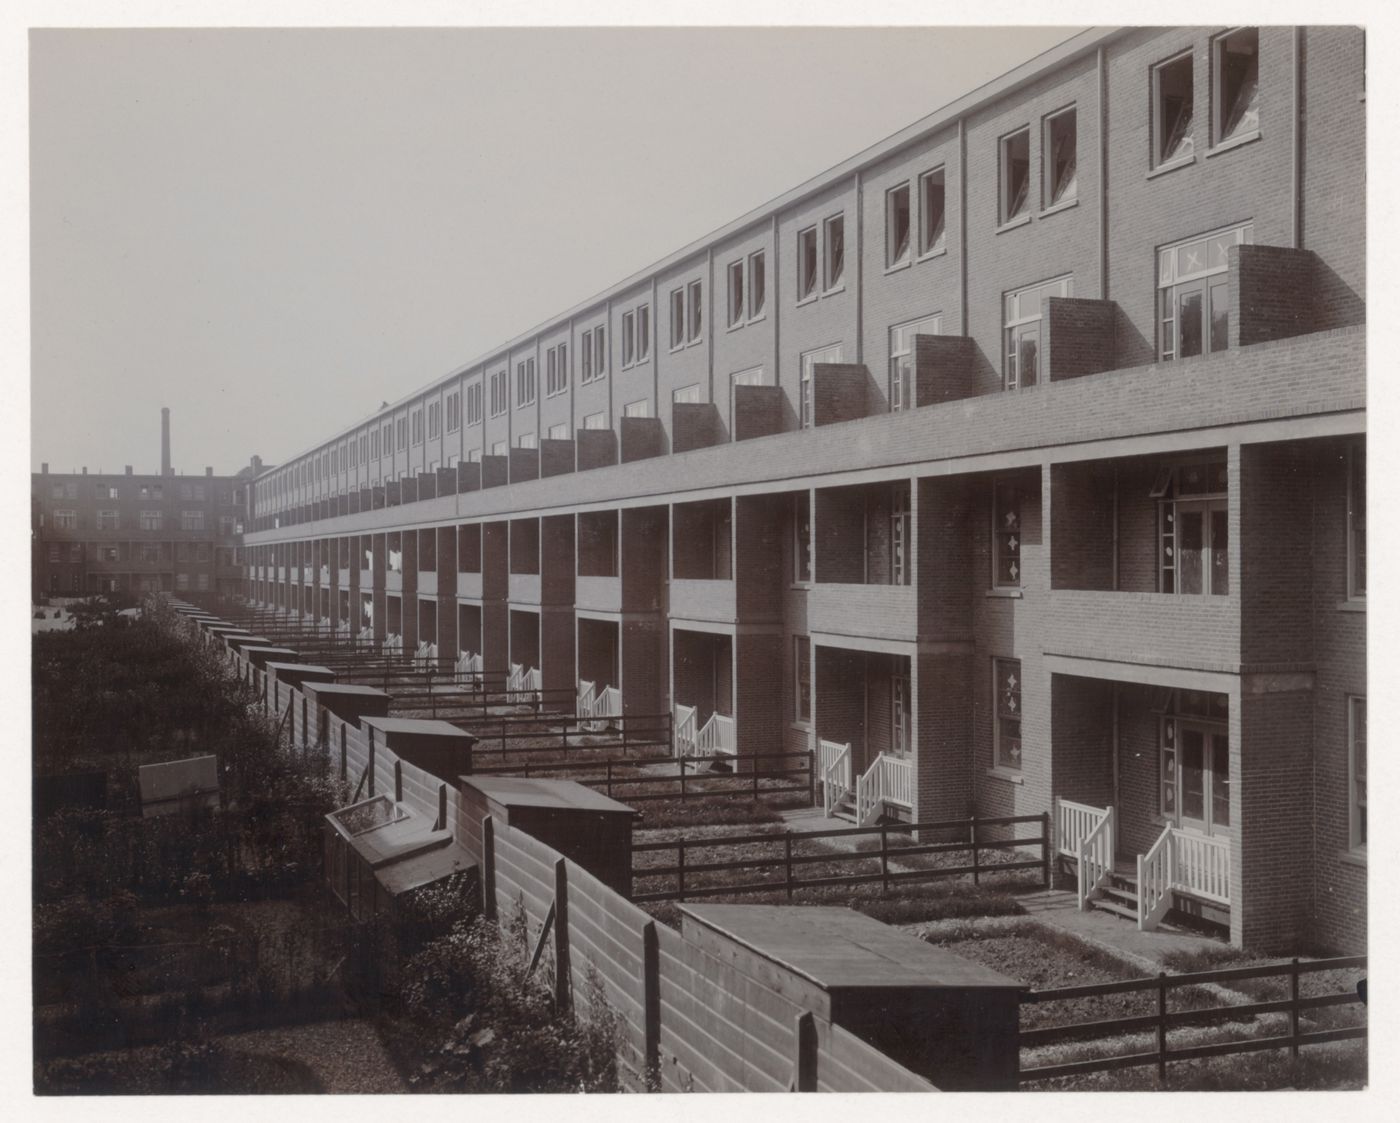 Exterior view of Tusschendijken Housing Estate showing balconies and back yards, Rotterdam, Netherlands